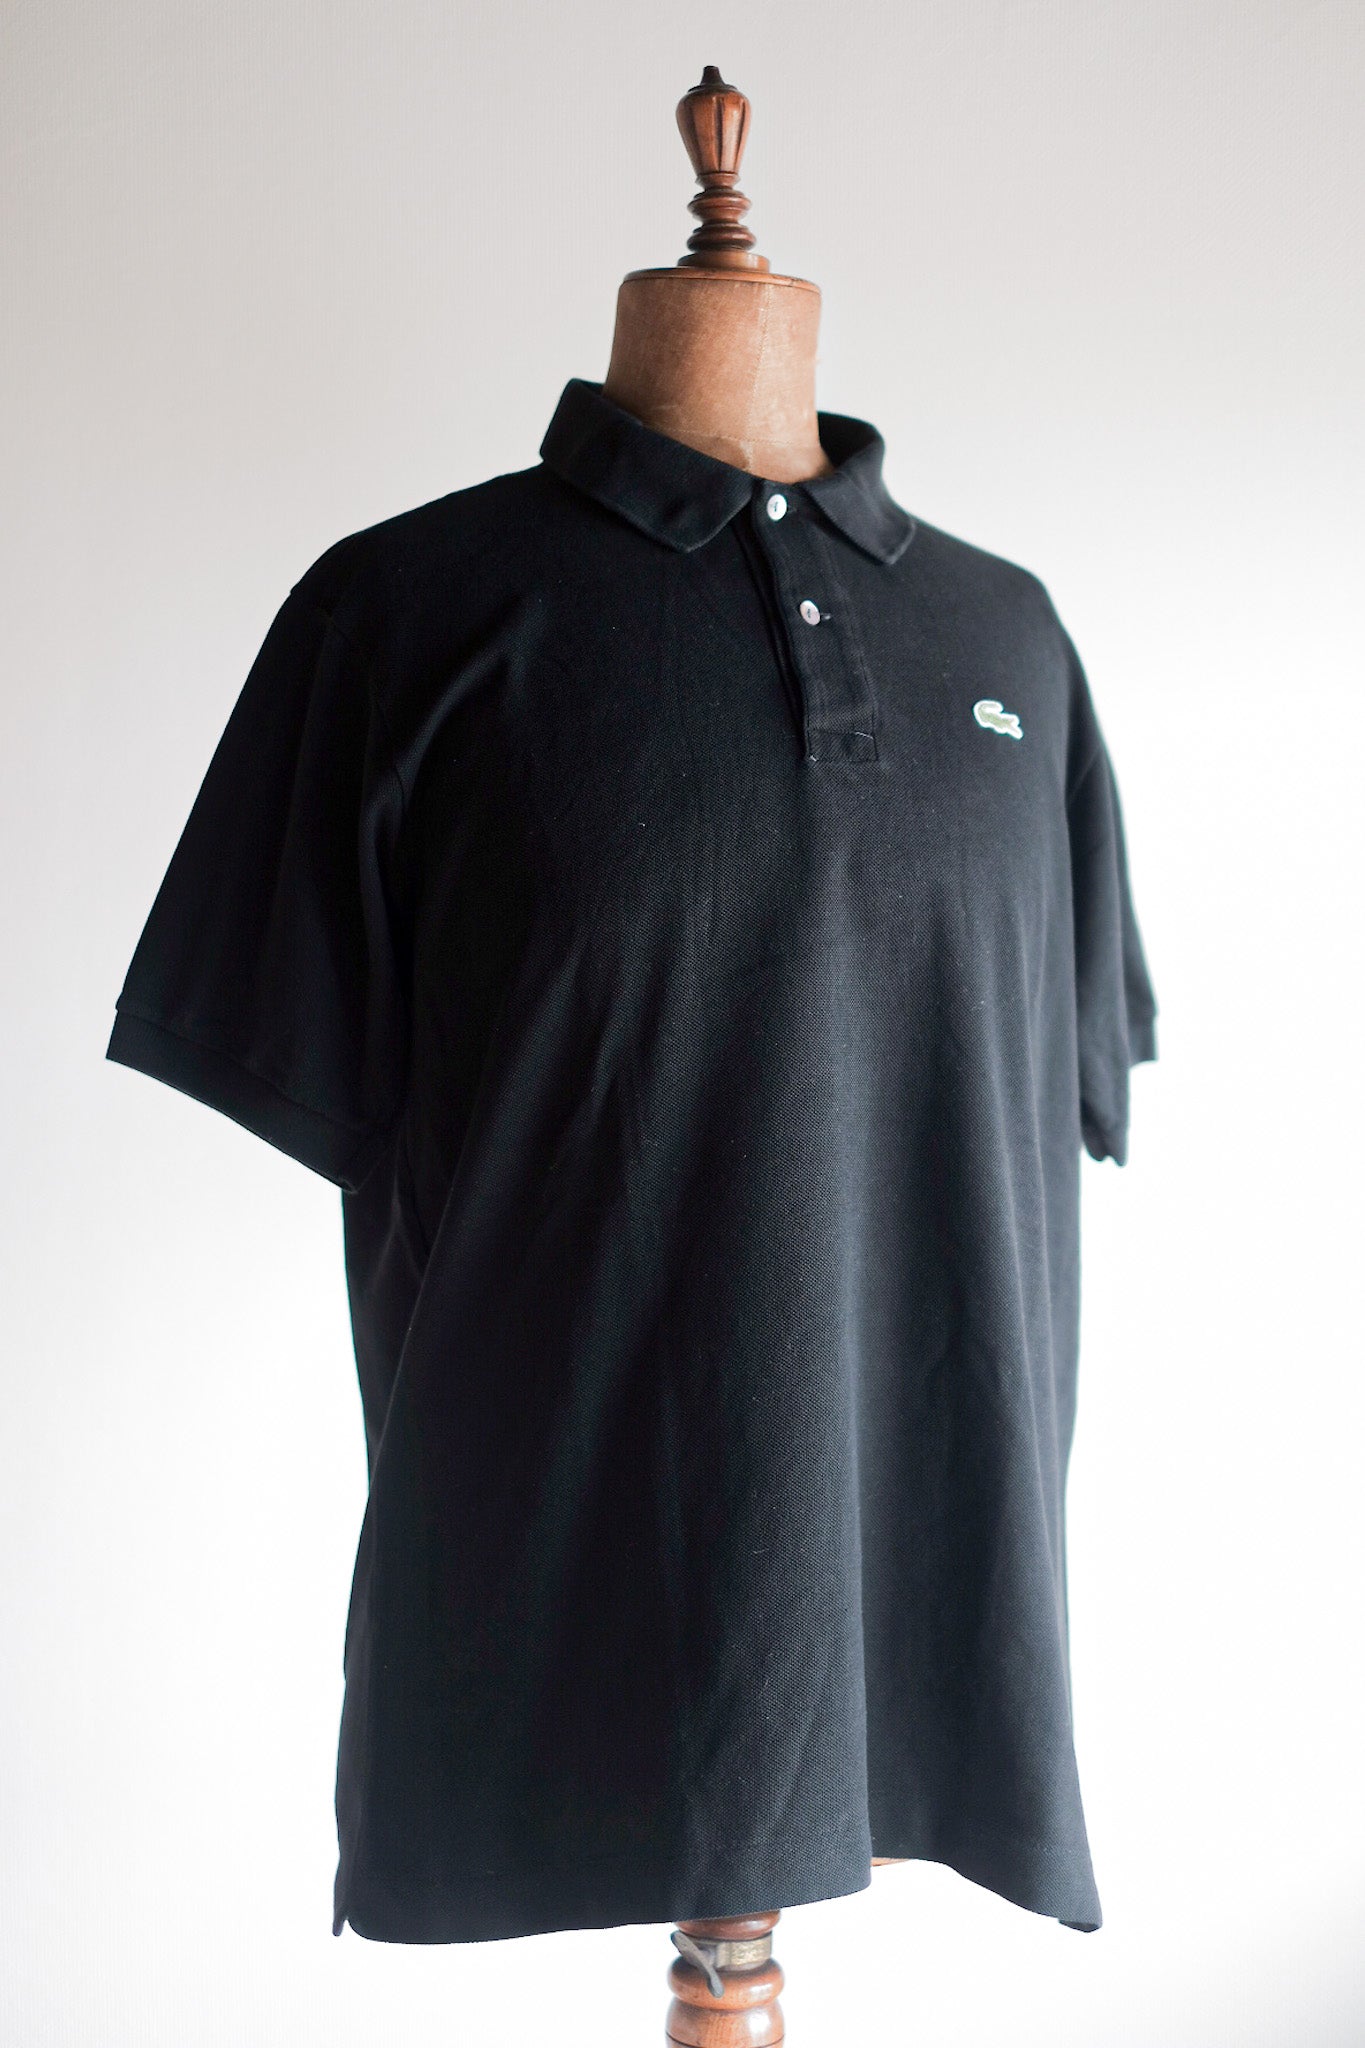 [~ 80's] Chemise Lacoste S/S Polo Shirt Size.5 "Black"